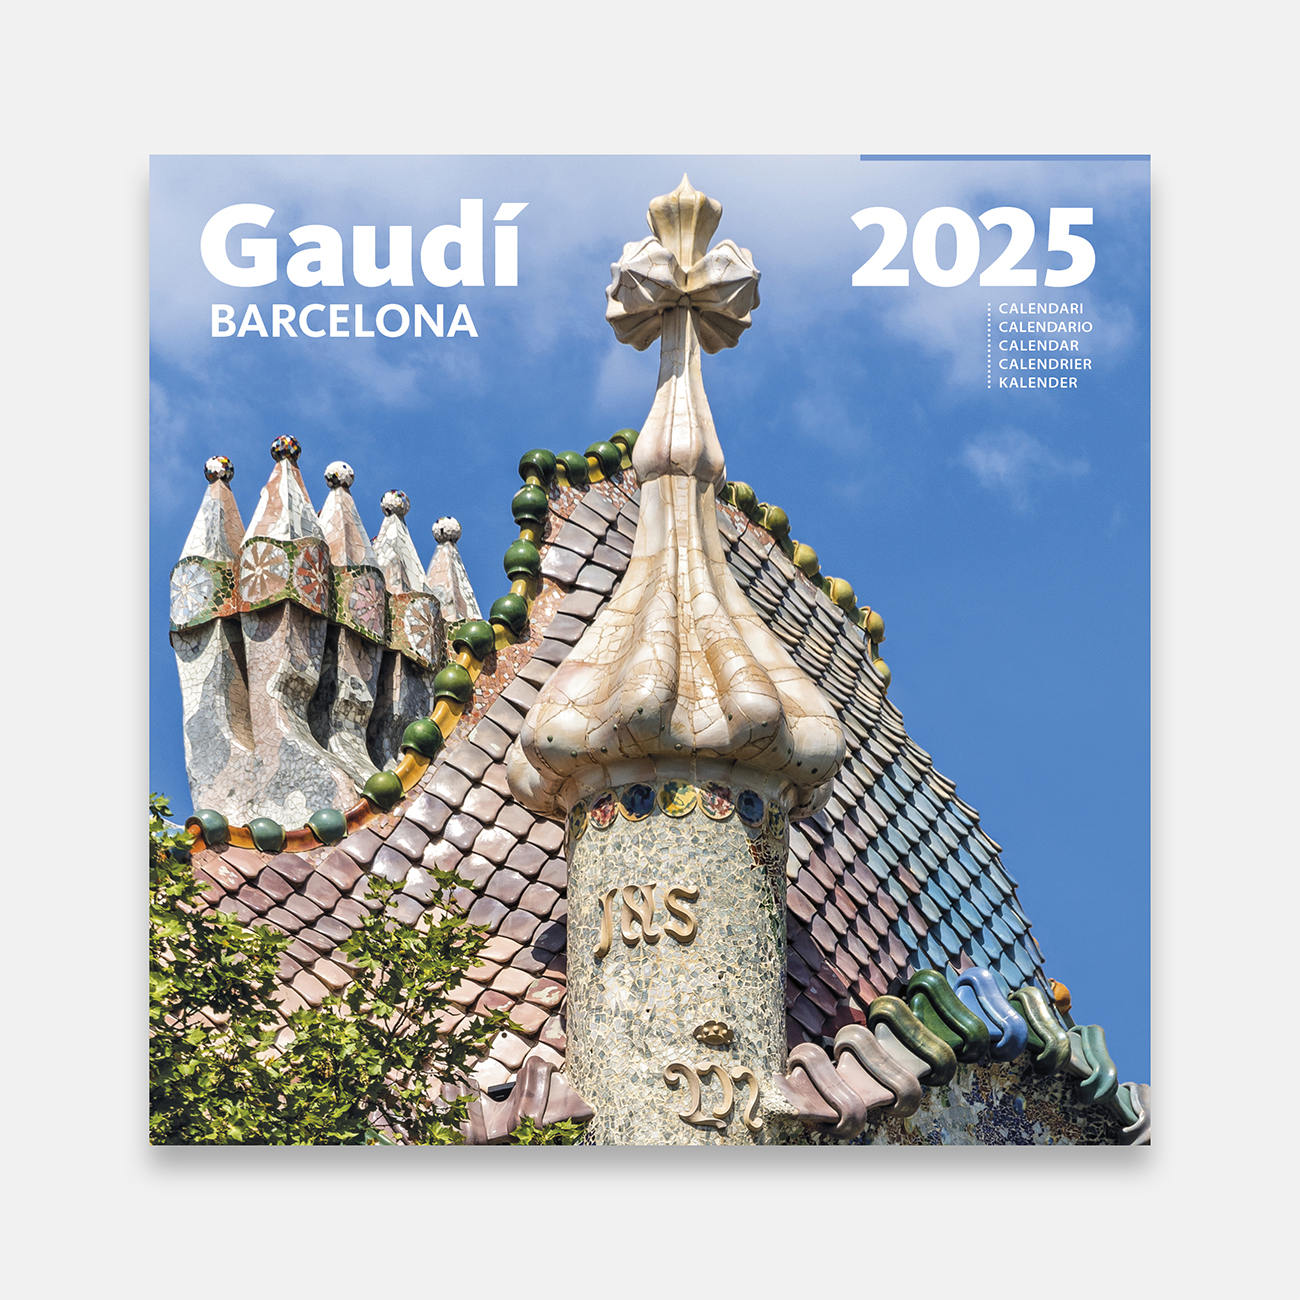 Calendrier 2025 Gaudí (Casa Batlló) 25g1 a calendario pared 2025 gaudi casa batllo